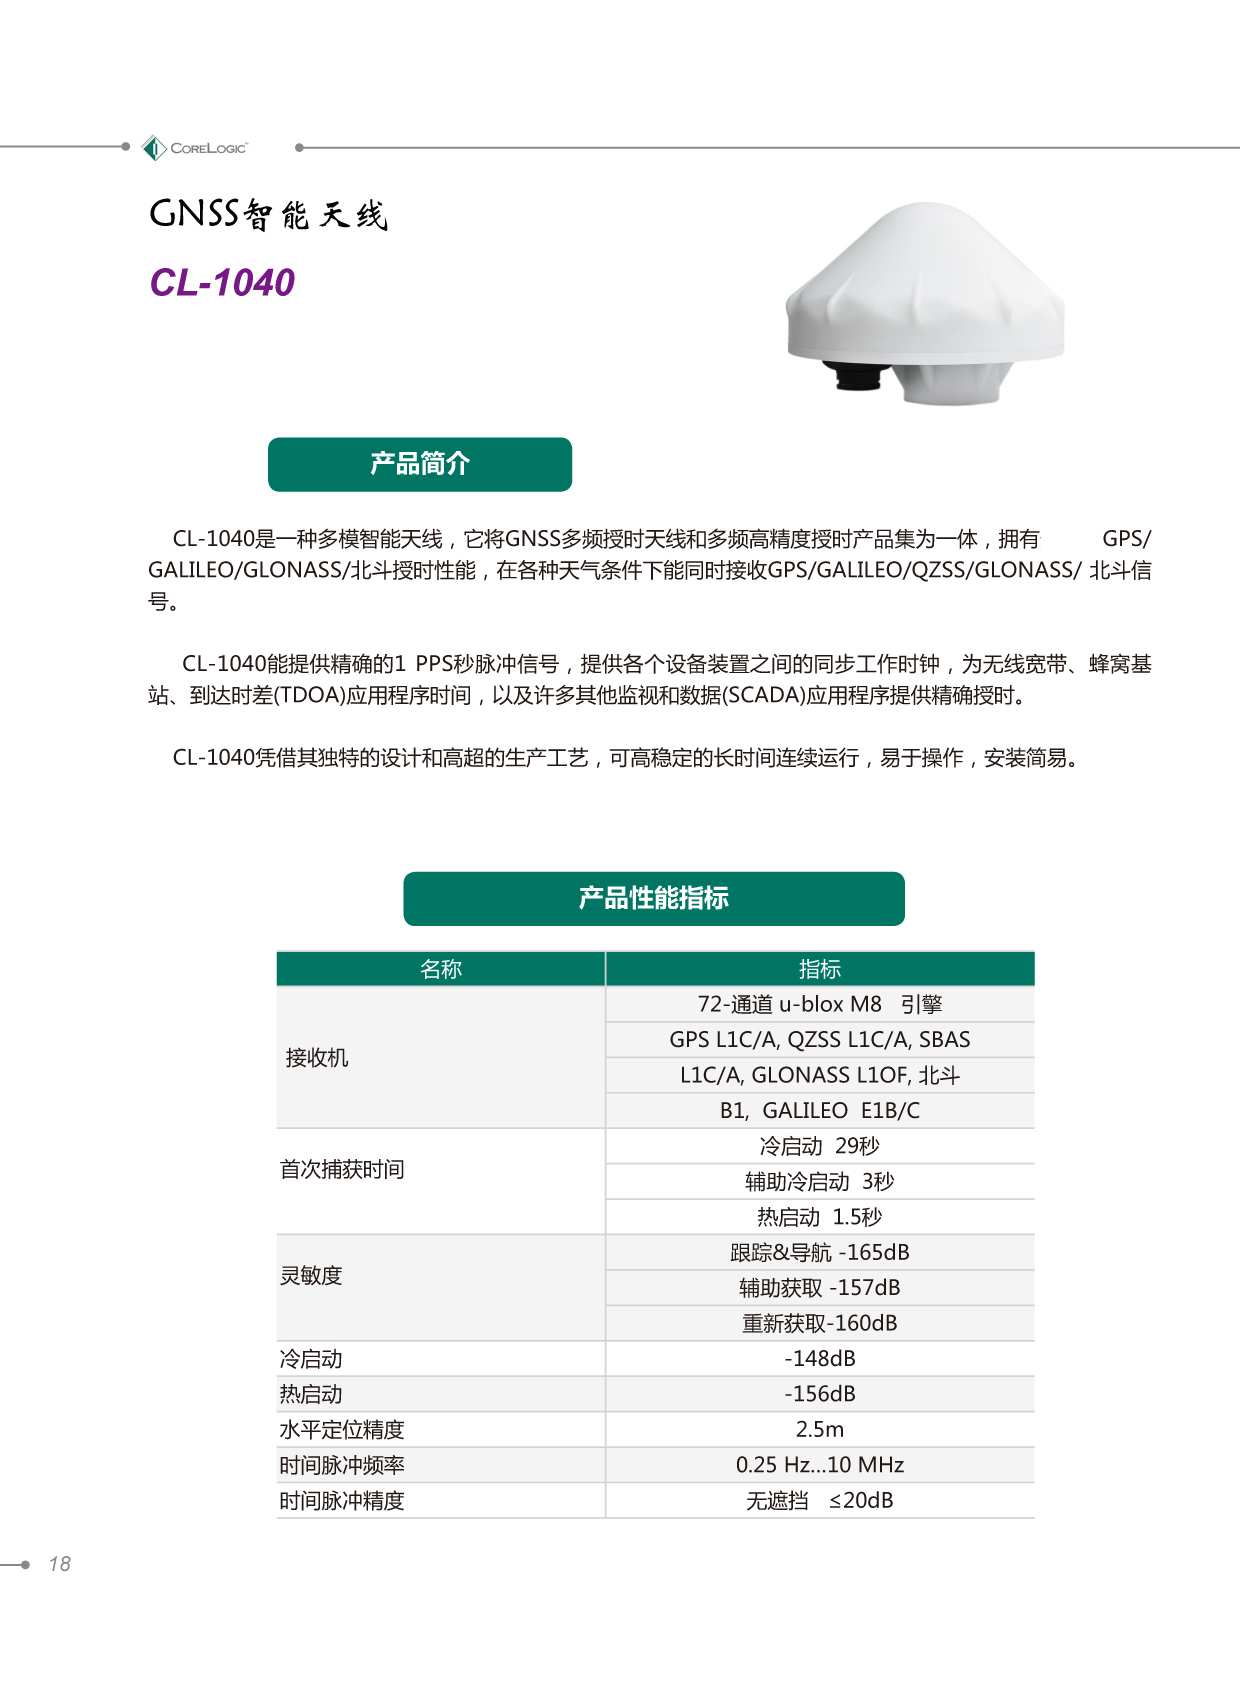 cl-1040-1产品详情